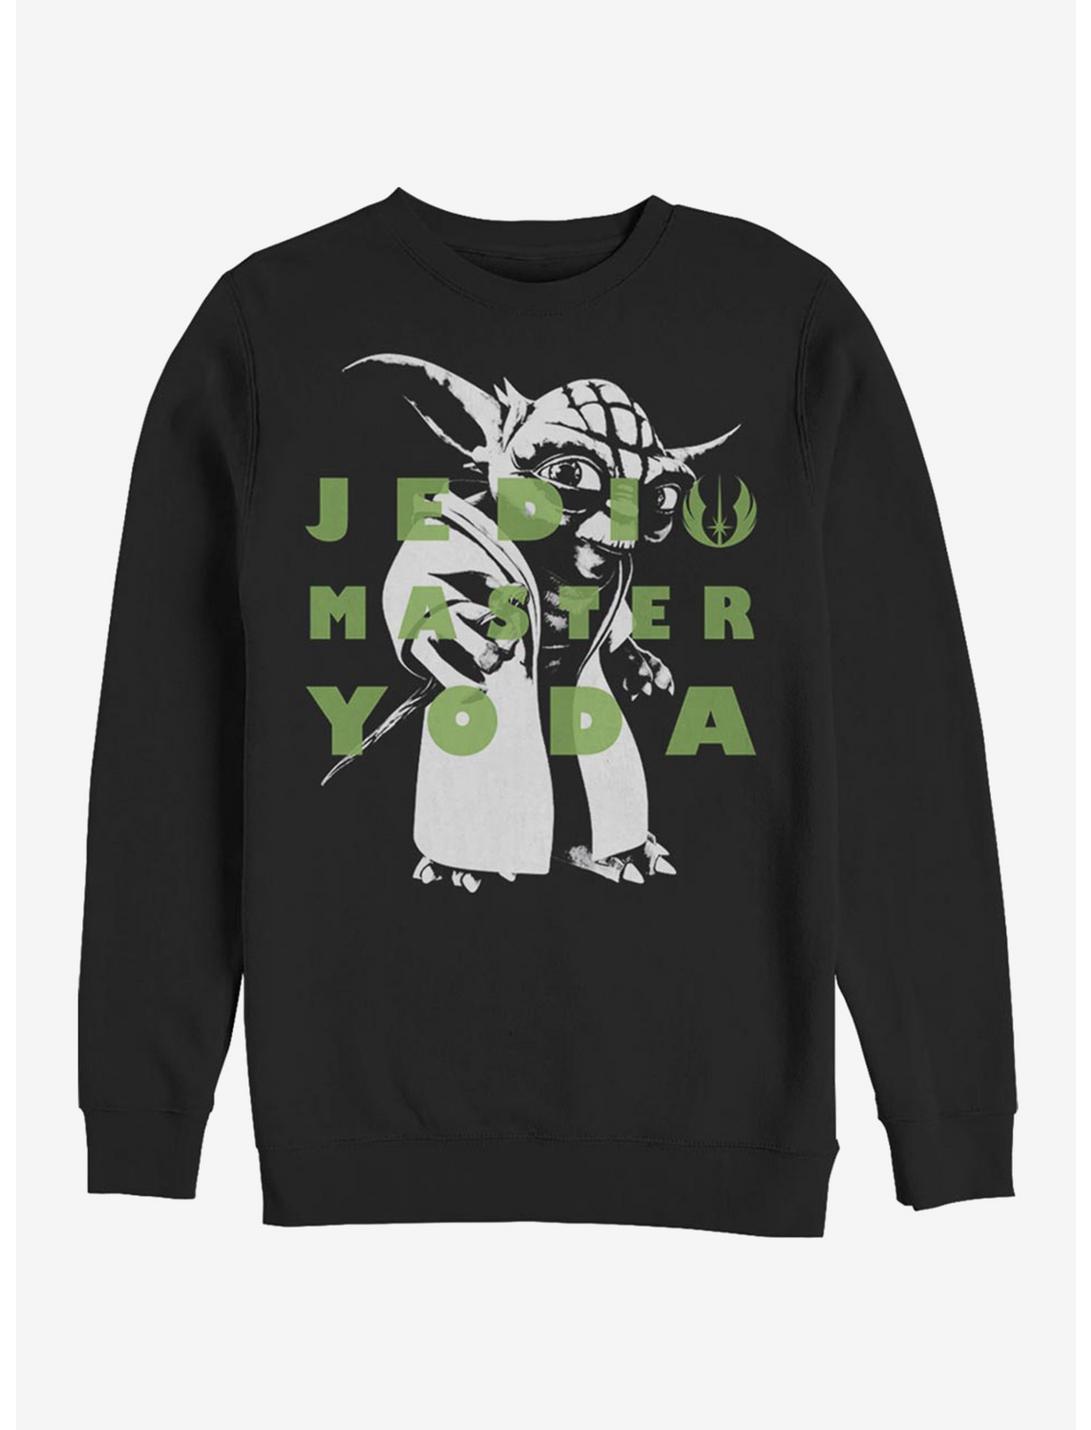 Plus Size Star Wars: The Clone Wars Yoda Text Sweatshirt, BLACK, hi-res